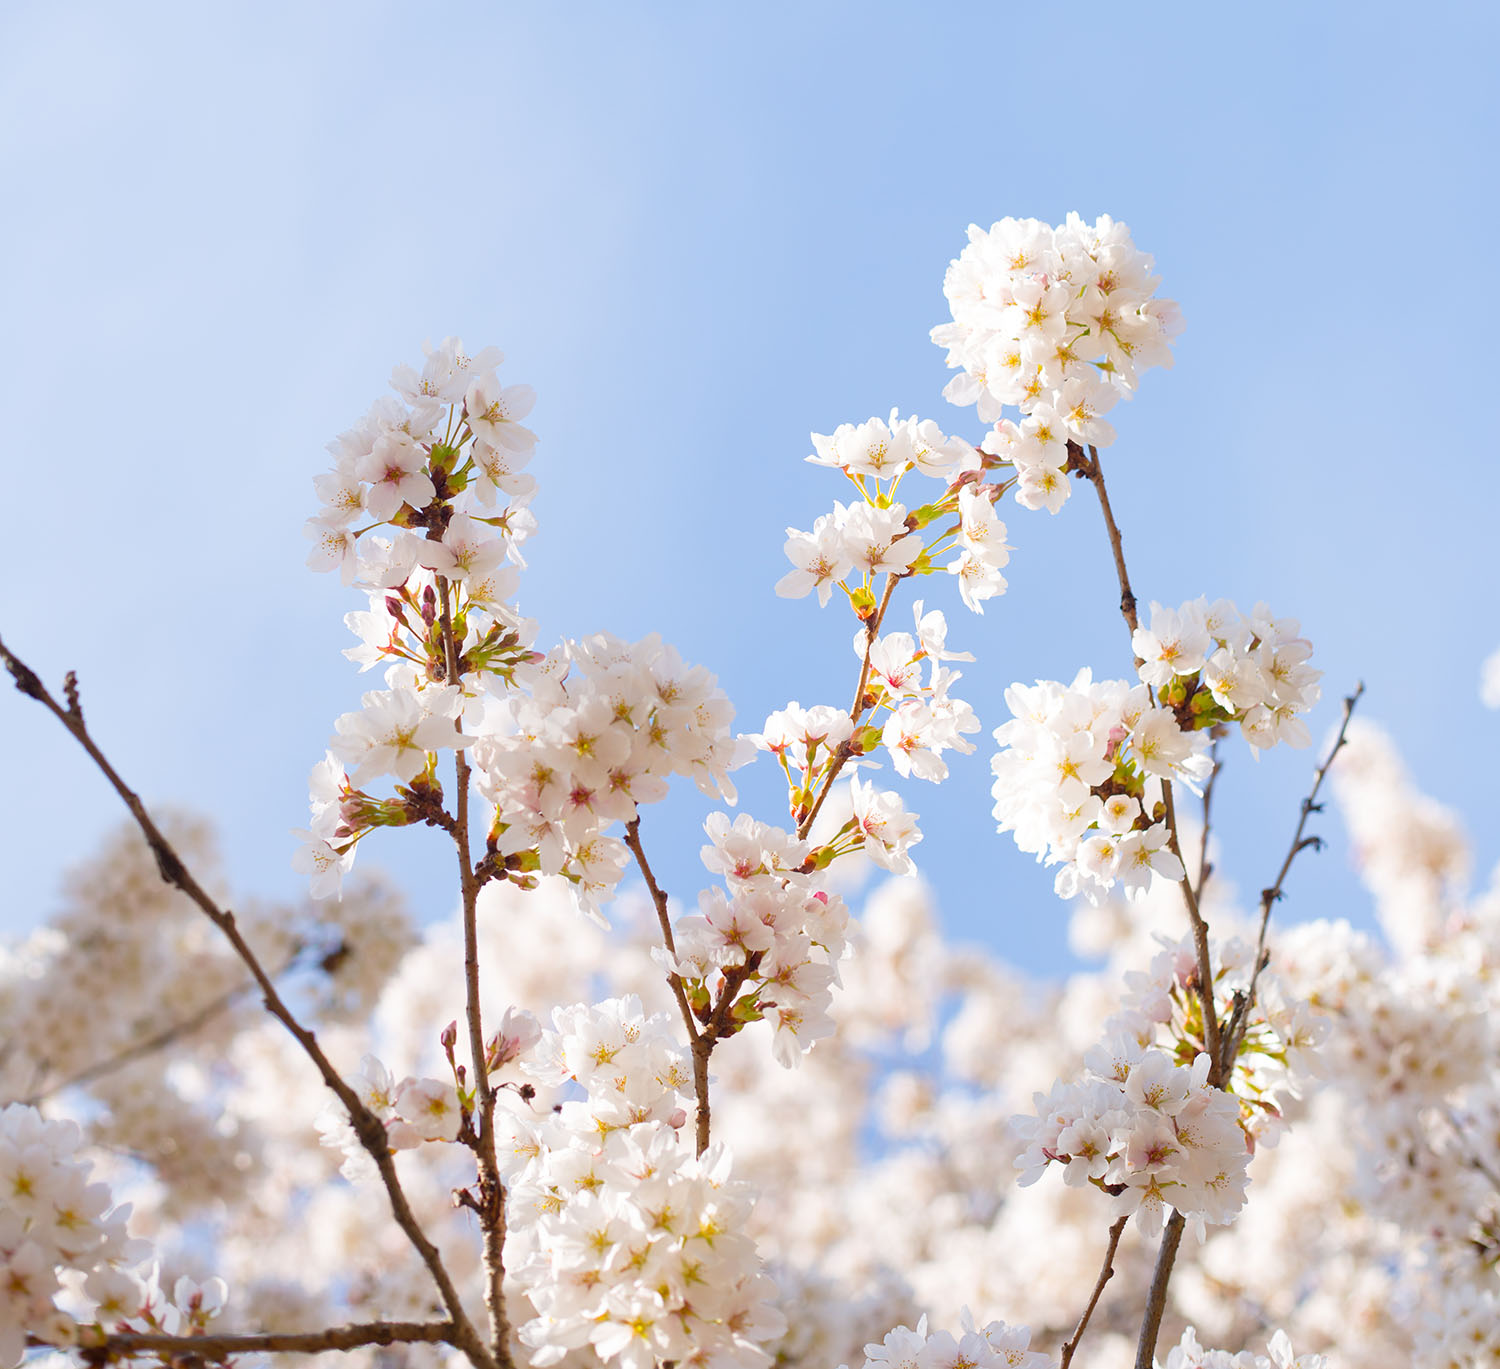 Closeup of cherry blossoms